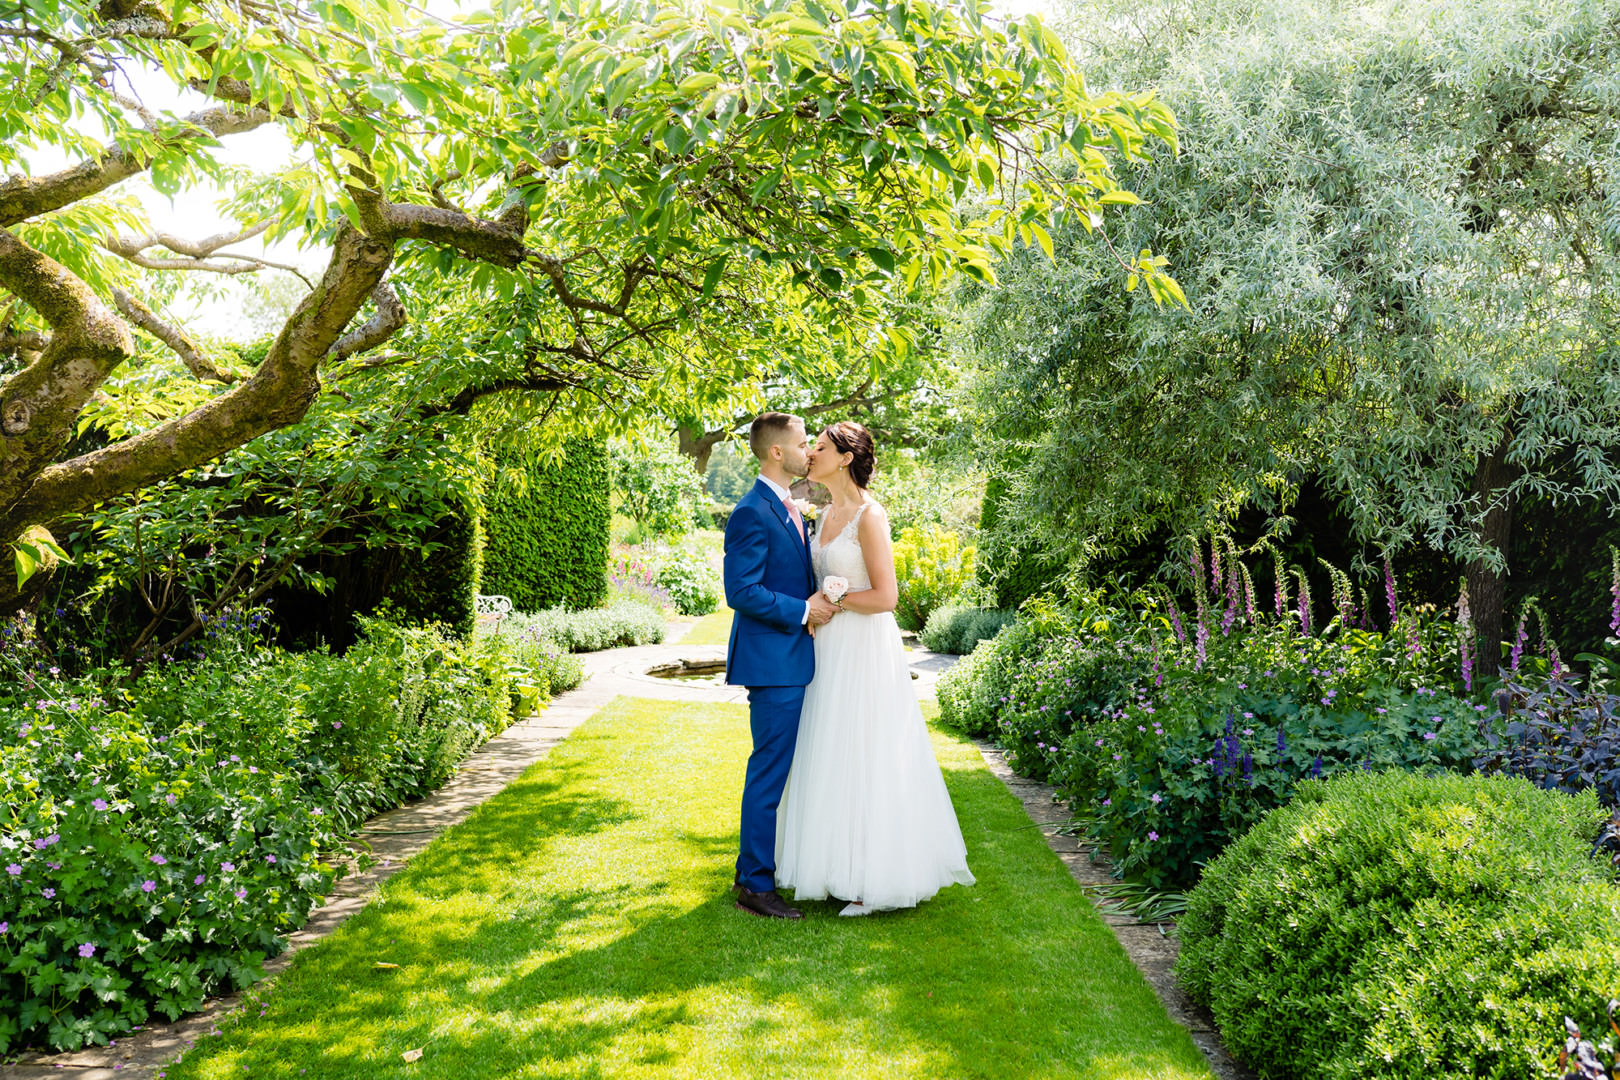 BRIDE AND GROOM AT MICKEFIELD HALL WEDDING VENUE IN HERTFORDSHIRE 